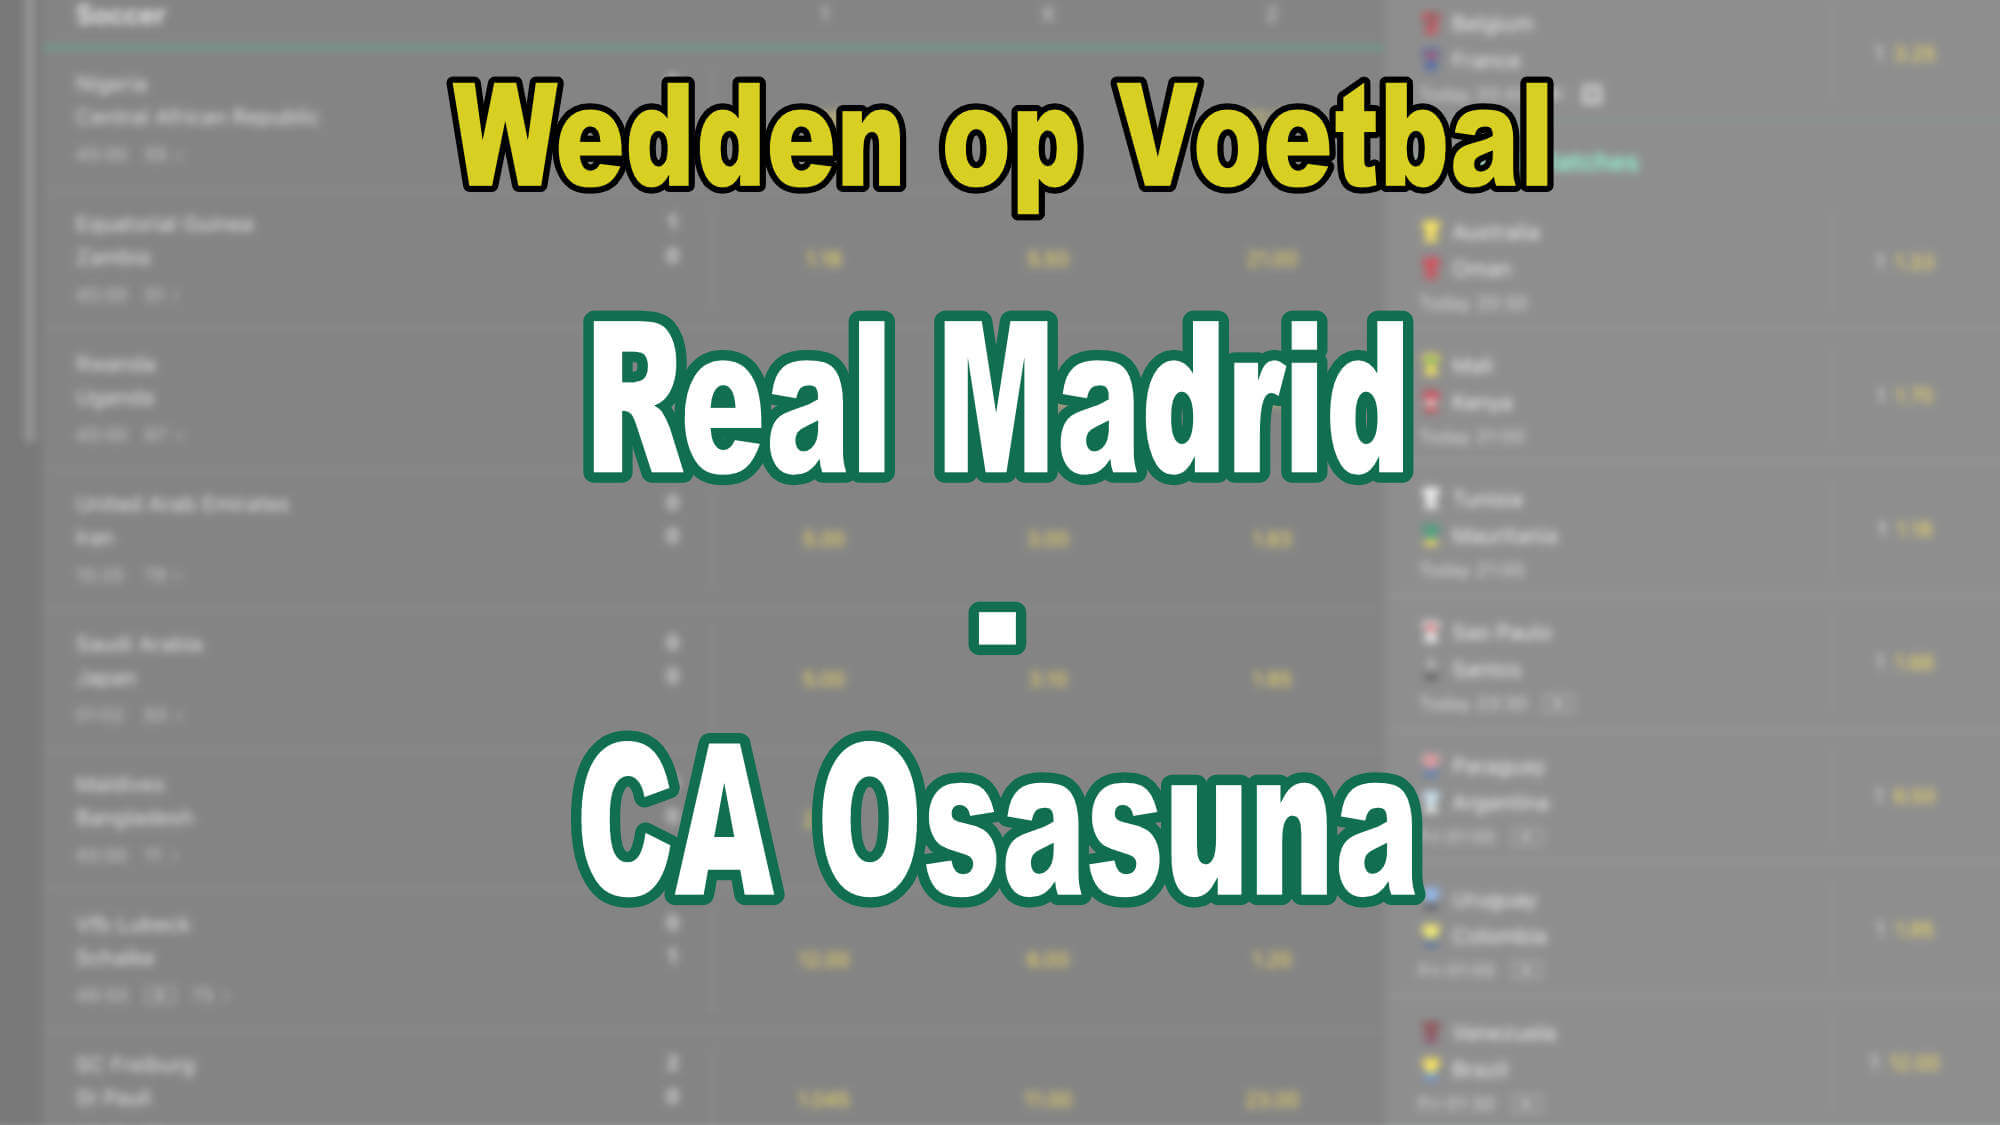 Wedden Op Voetbal Real Madrid - CA Osasuna